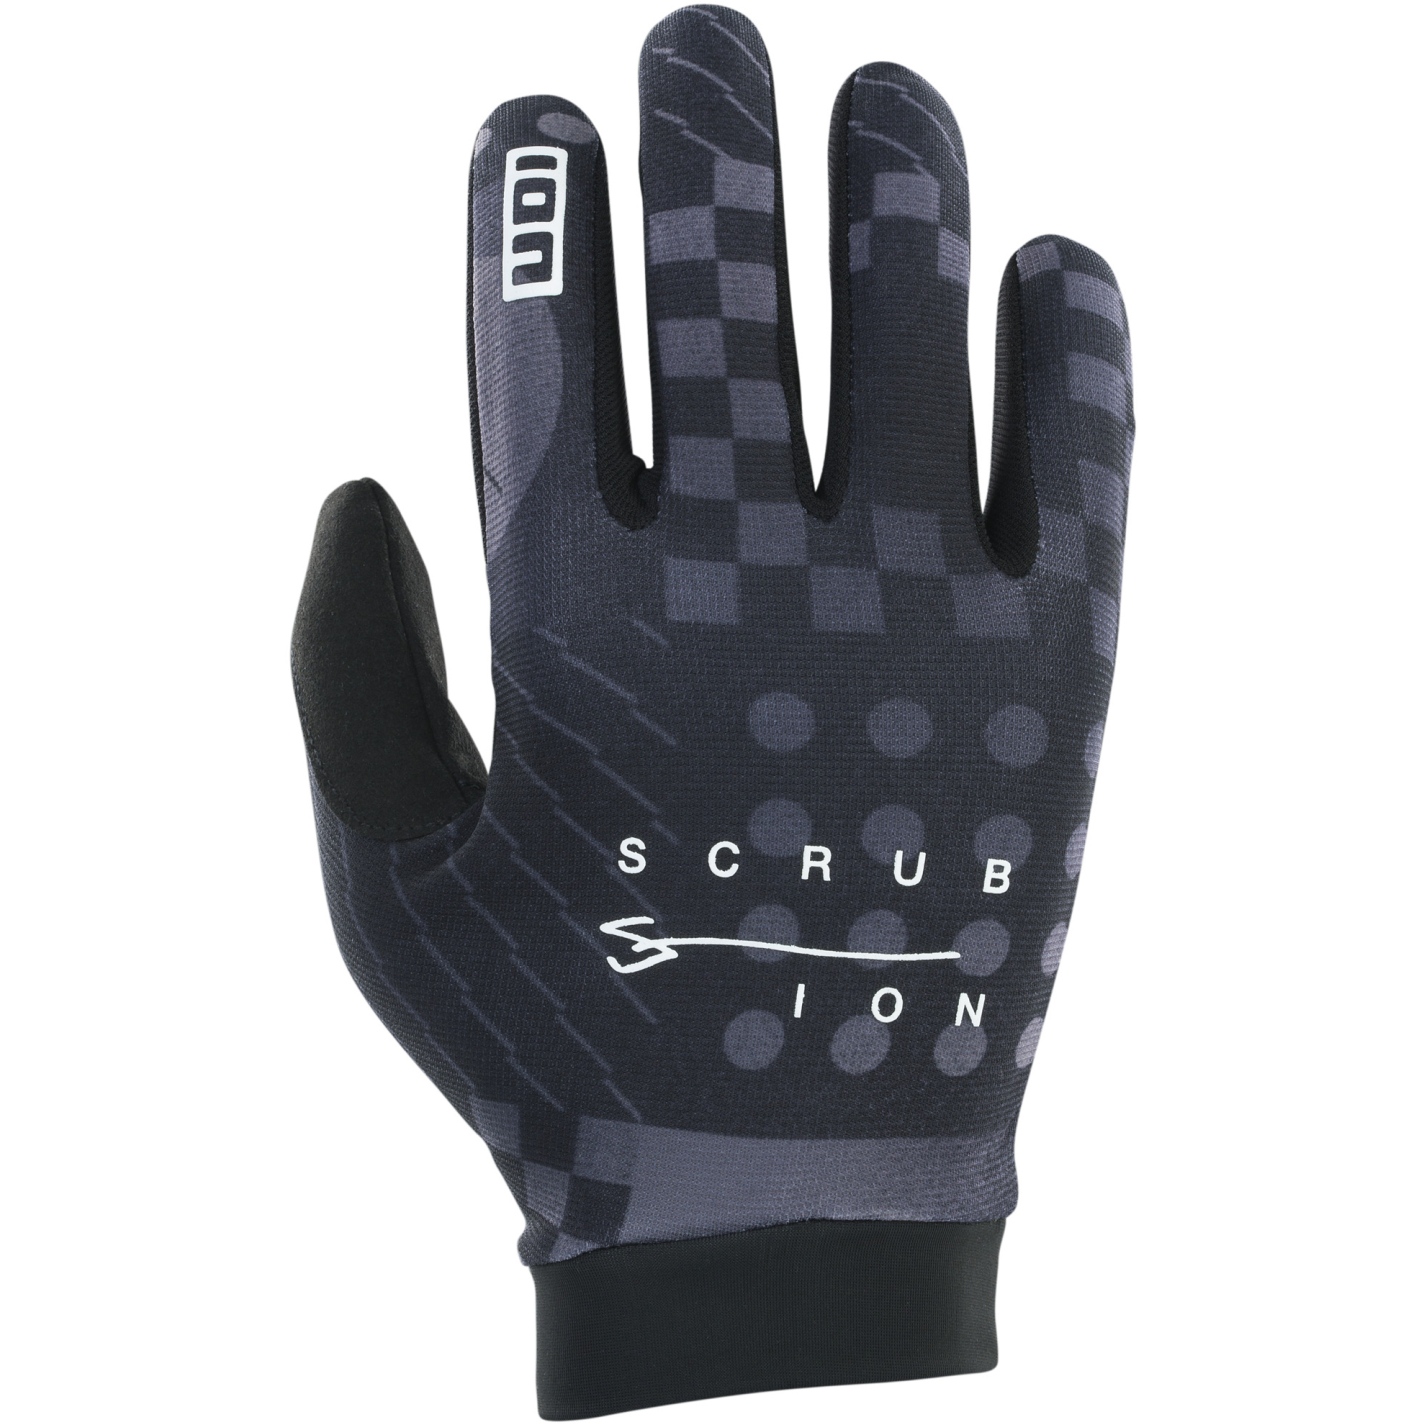 Picture of ION Bike Gloves Scrub - Black 47230